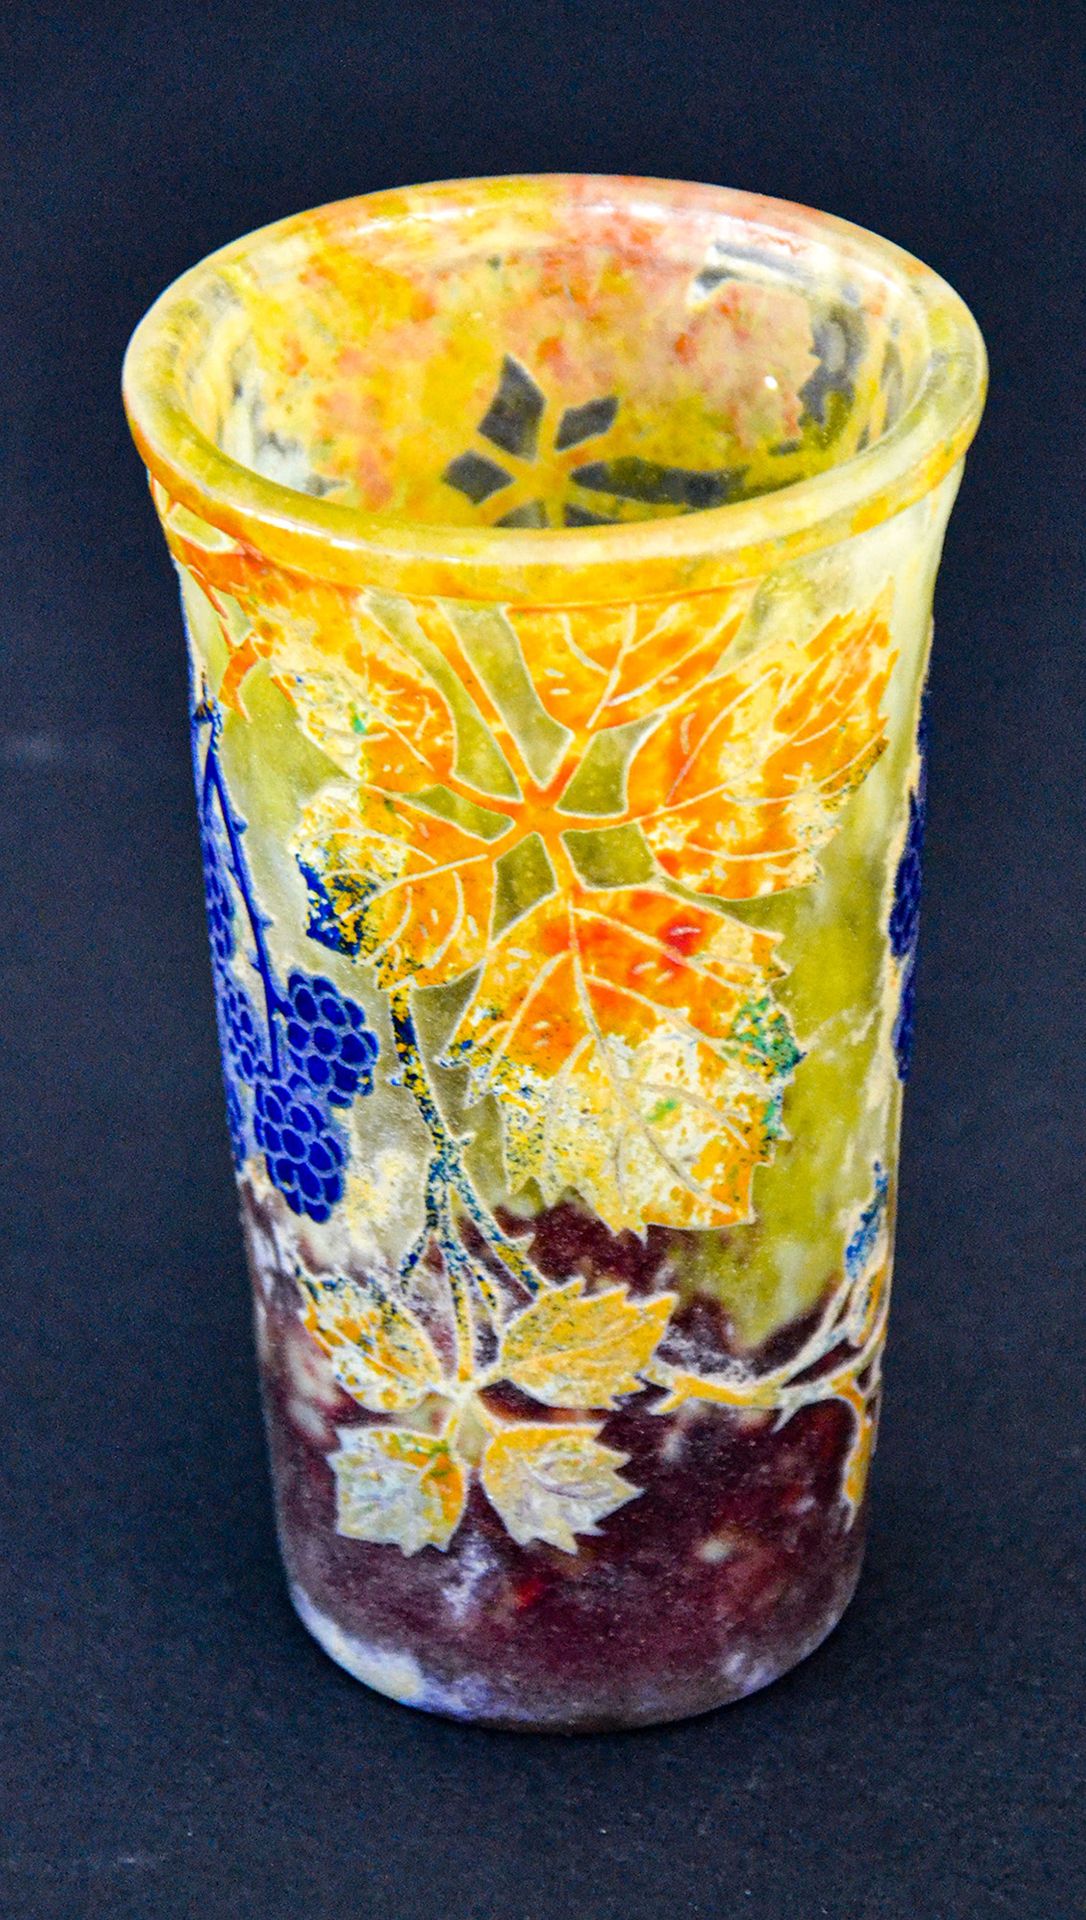 DAUM NANCY DAUM NANCY

Small round vase of multilayer etched glass decorated wit&hellip;